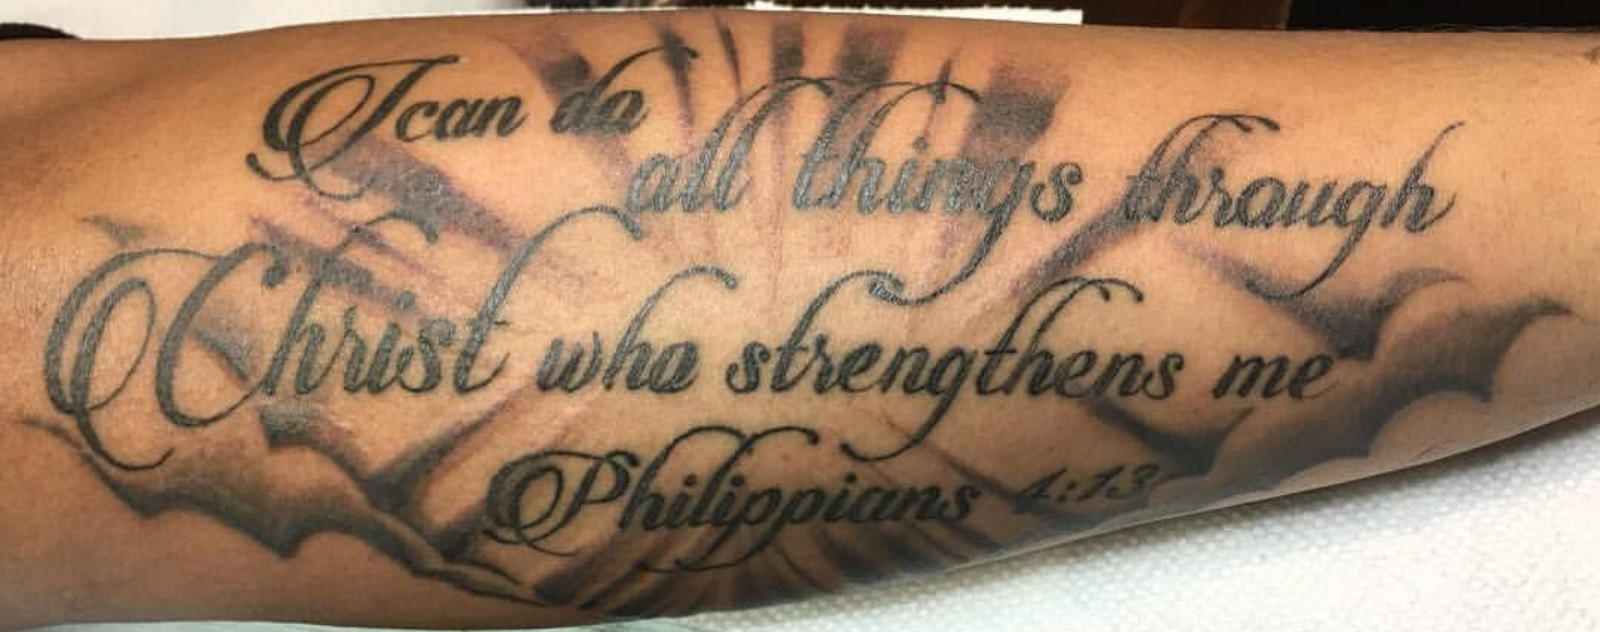 philippians-4-13-tattoo-forearm-3